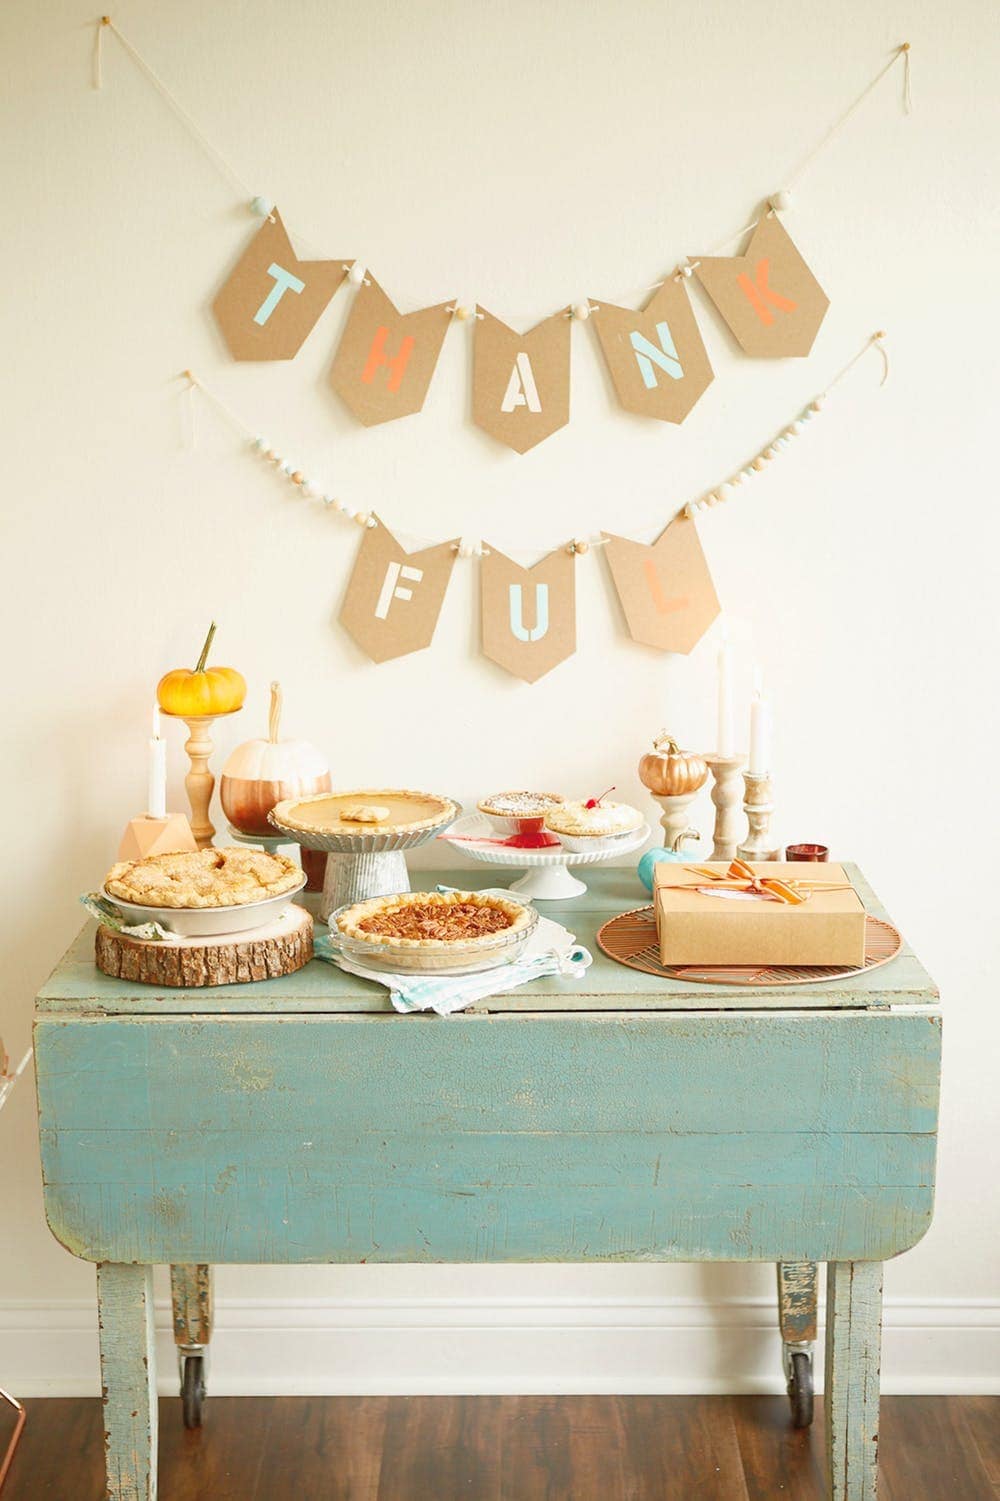 Make a friendsgiving dessert table